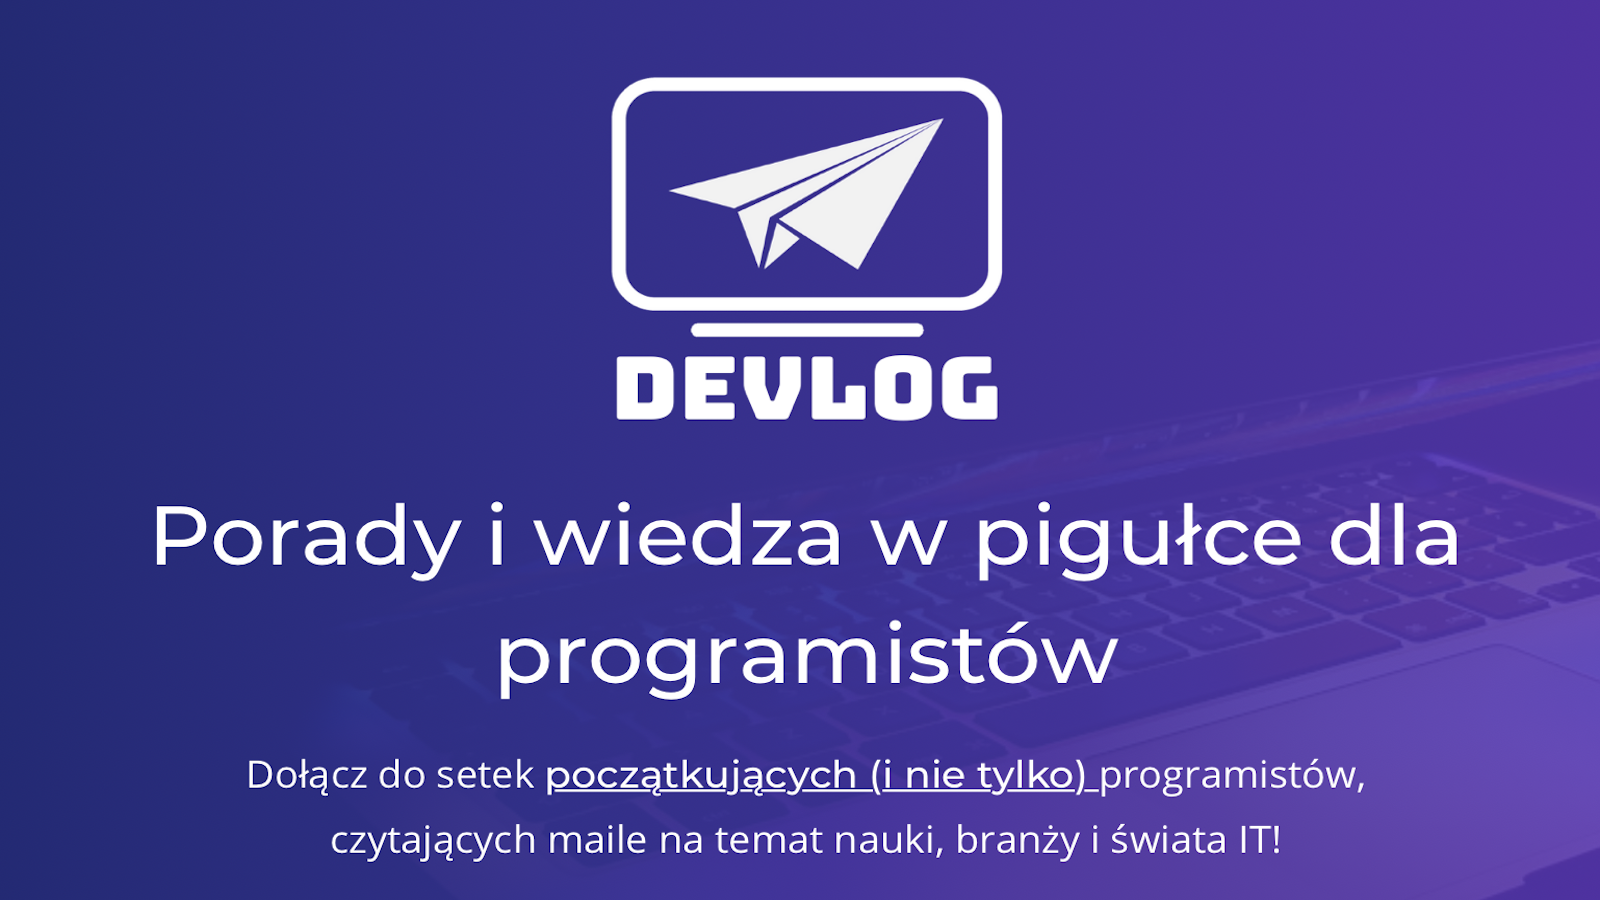  DevLog - newsletter logo